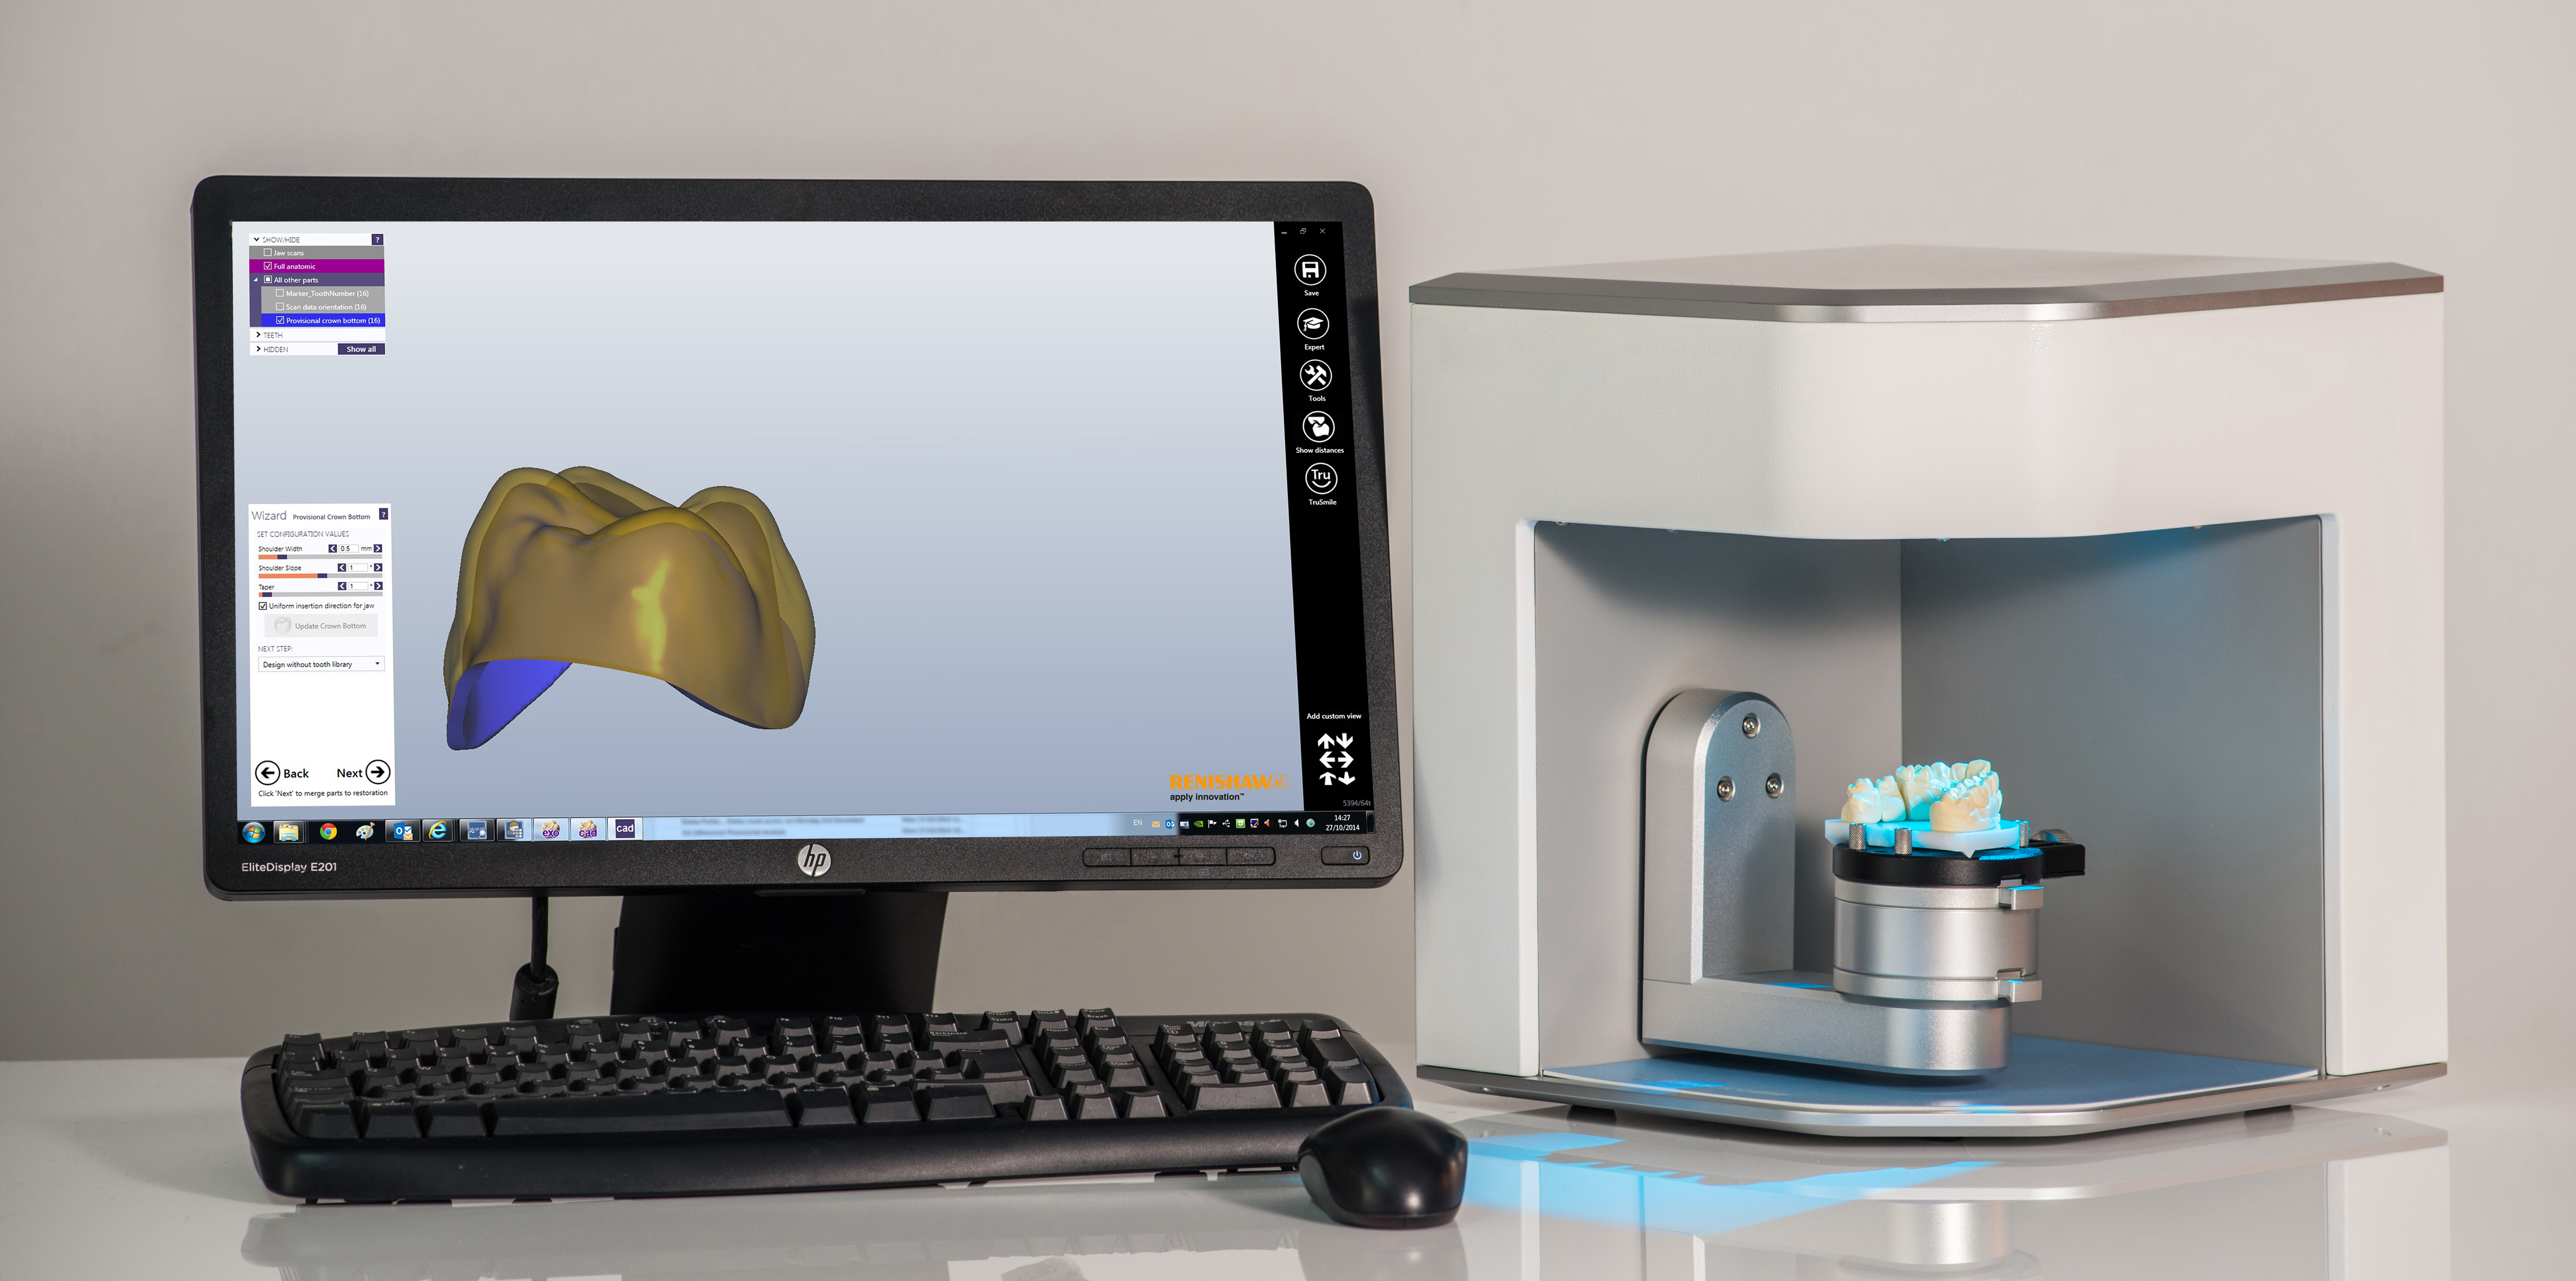 Medit scanner coupled with Renishaw Dental Studio (RDS) for design